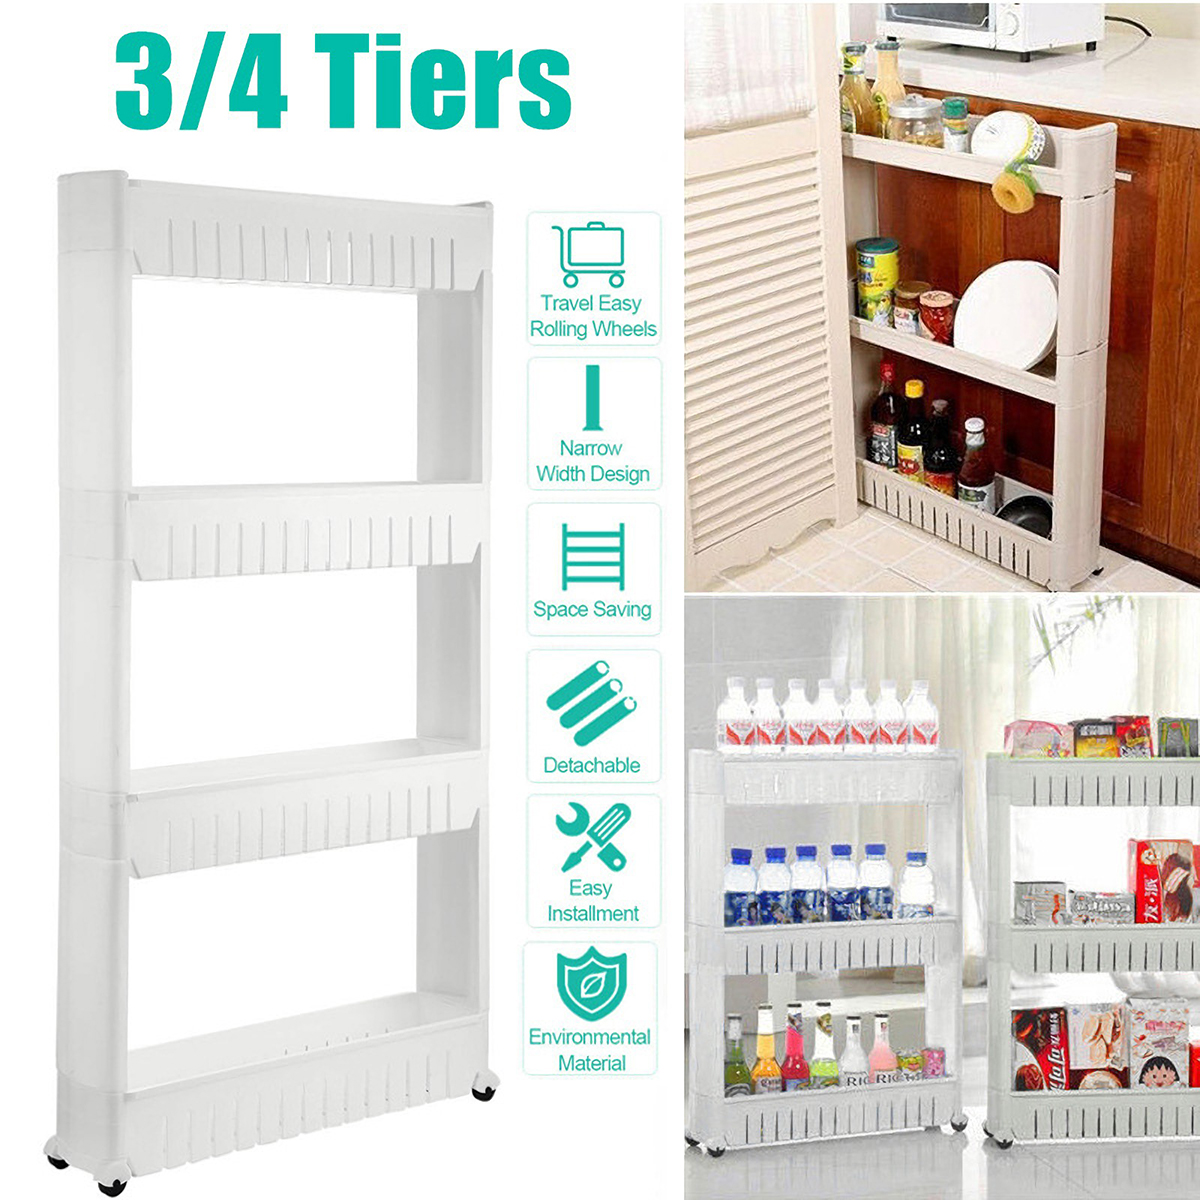 34-Layers-Movable-Storage-Rack-Crevice-Storage-Shelf--Organizer-with-Wheel-Refrigerator-Crevice-Stor-1756998-1